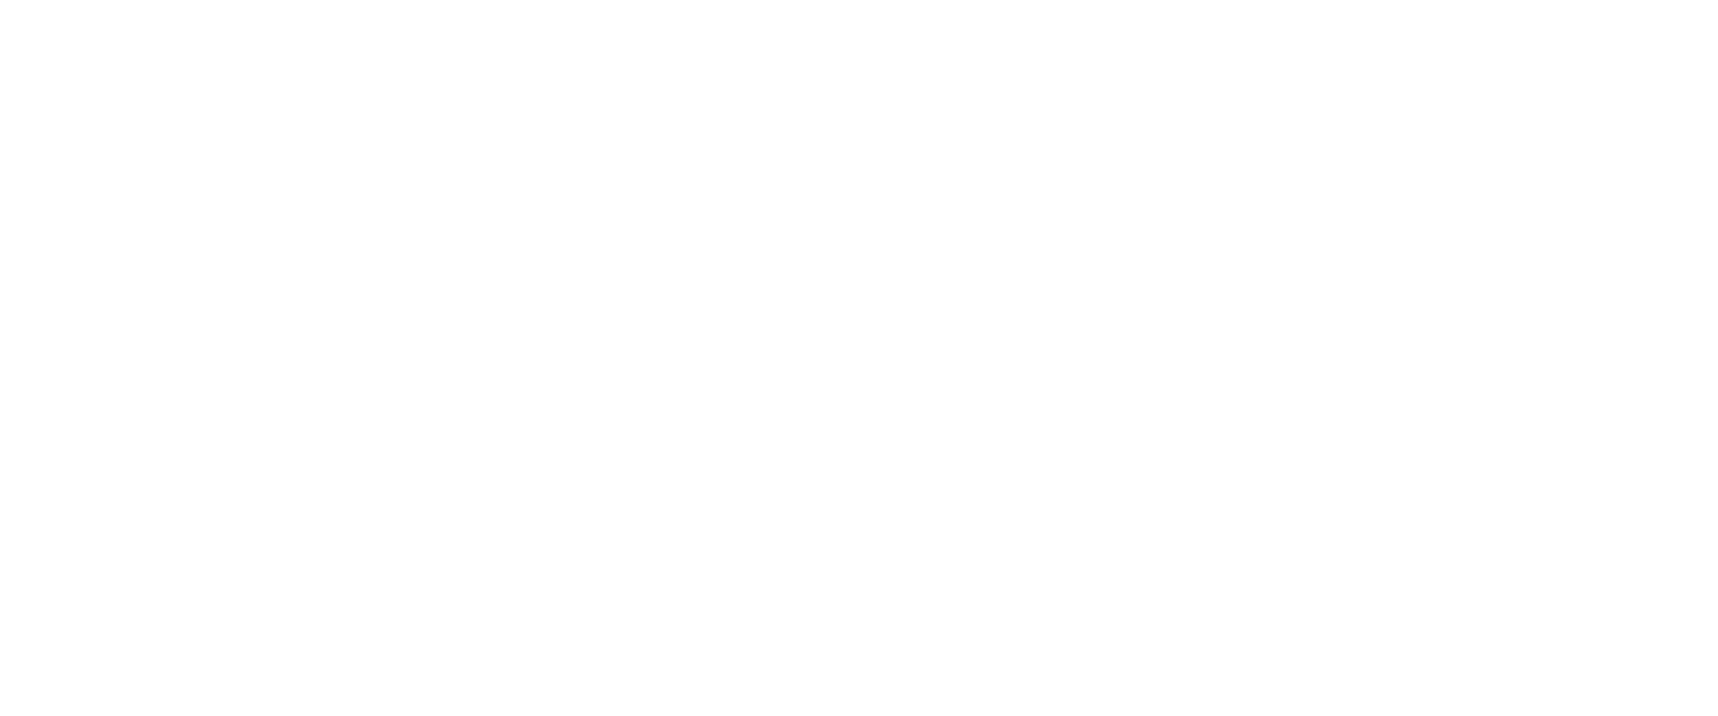 New Jersey Motor Vehicle Commission Logo